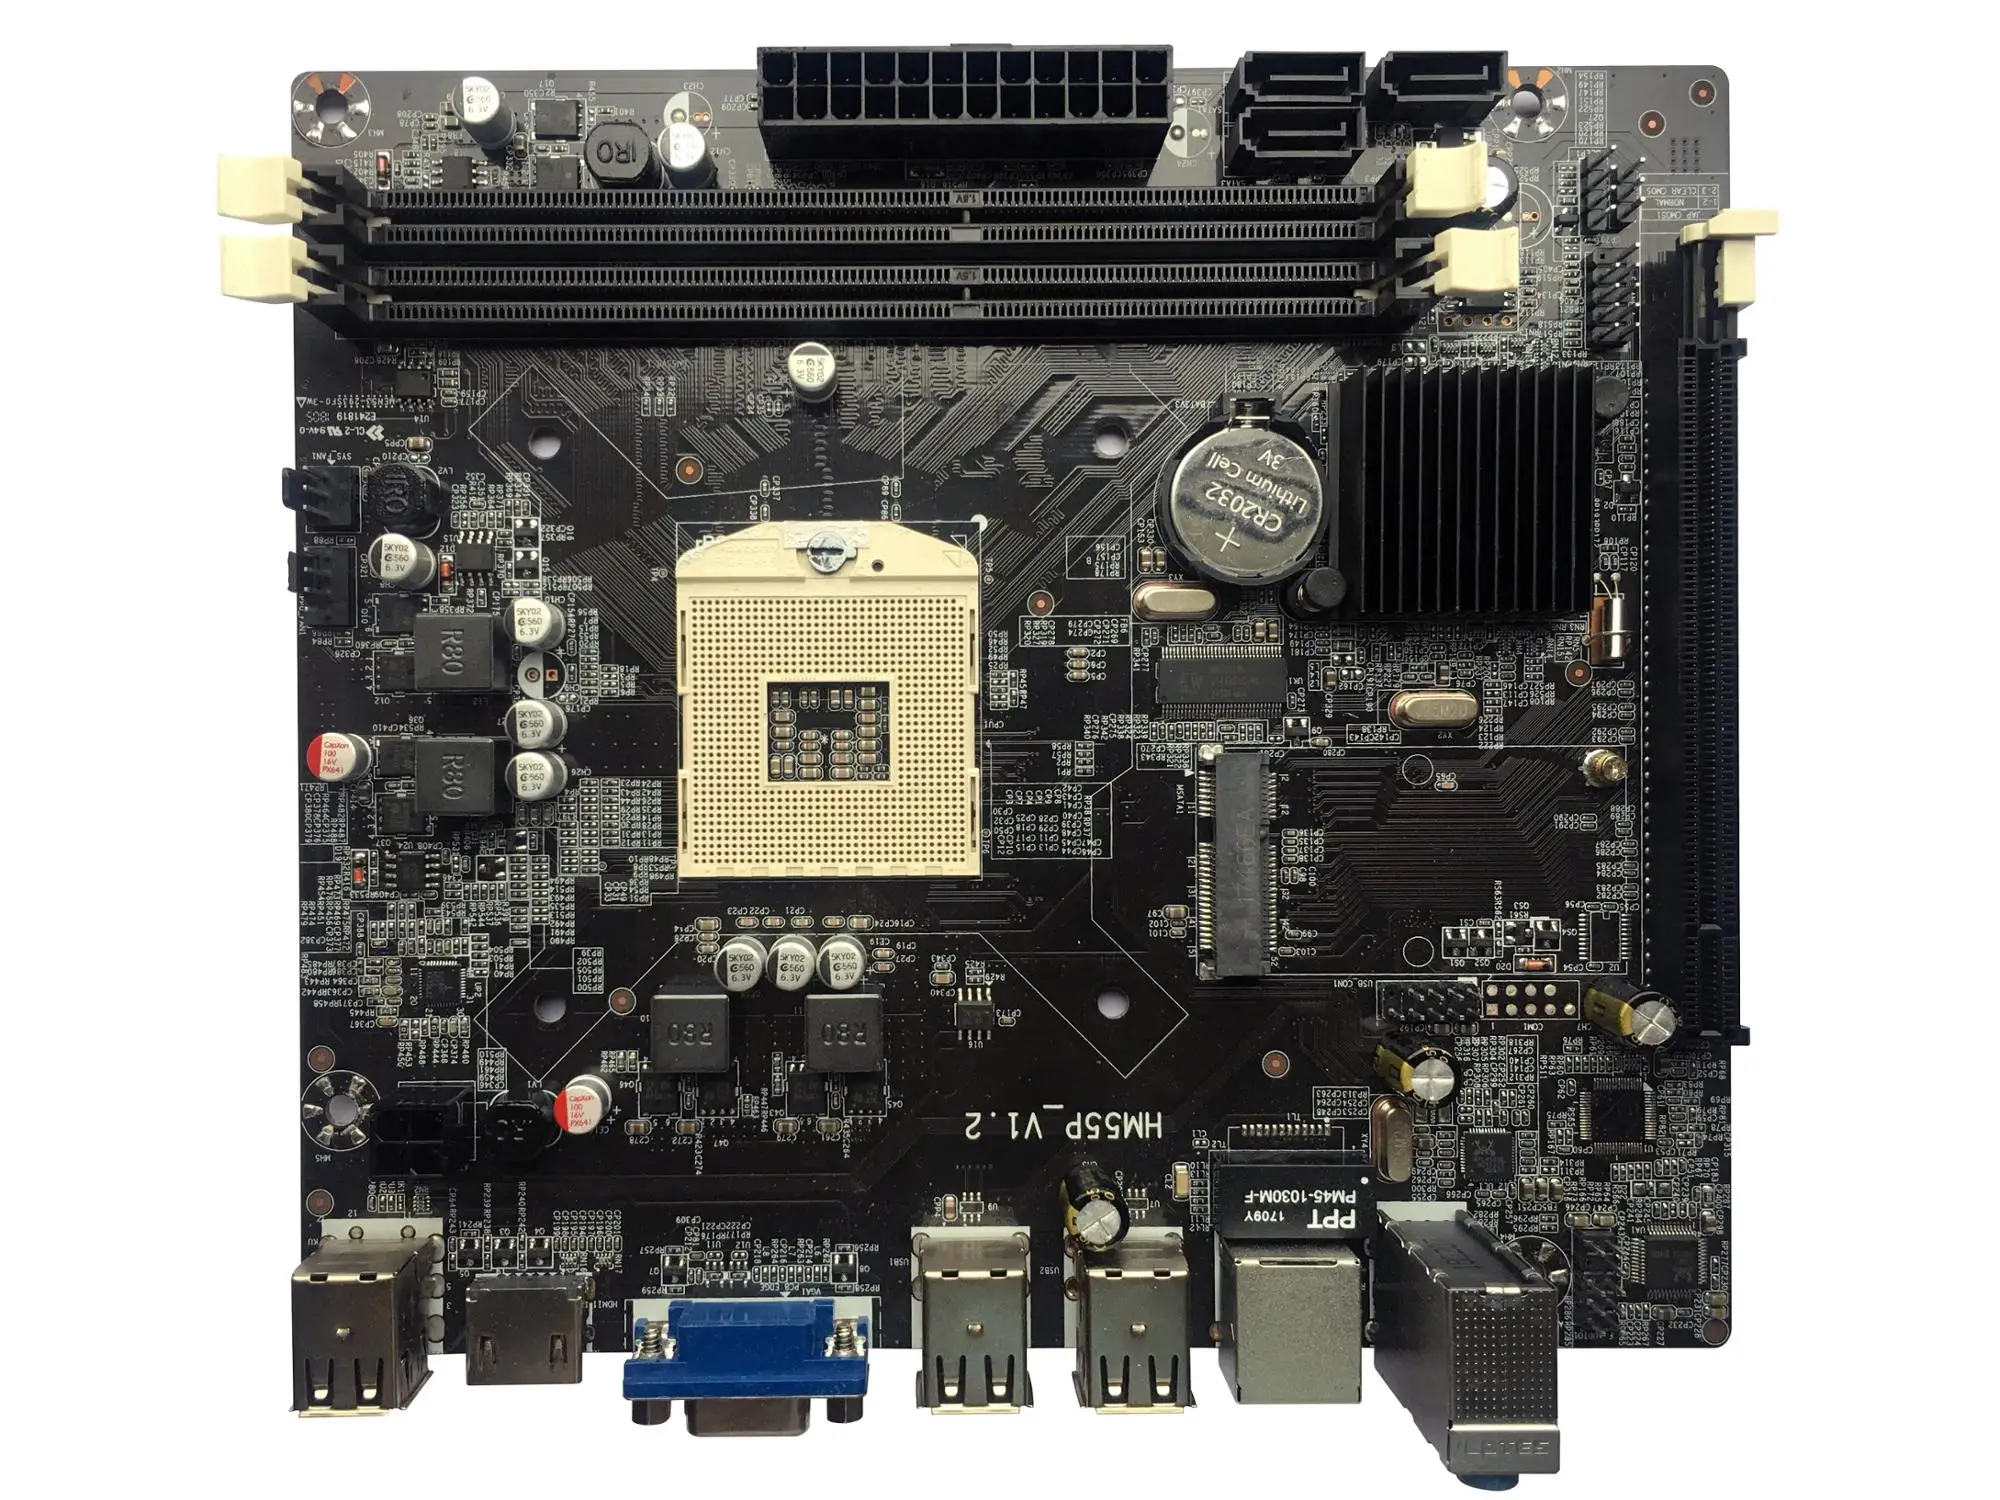 Intel Hm55 Motherboard Pga9 With I5 430m I5 540m I5 580m Processor Combo Buy Hm55 Motherboard 1156 Motherboard H55 Motherboard Product On Alibaba Com